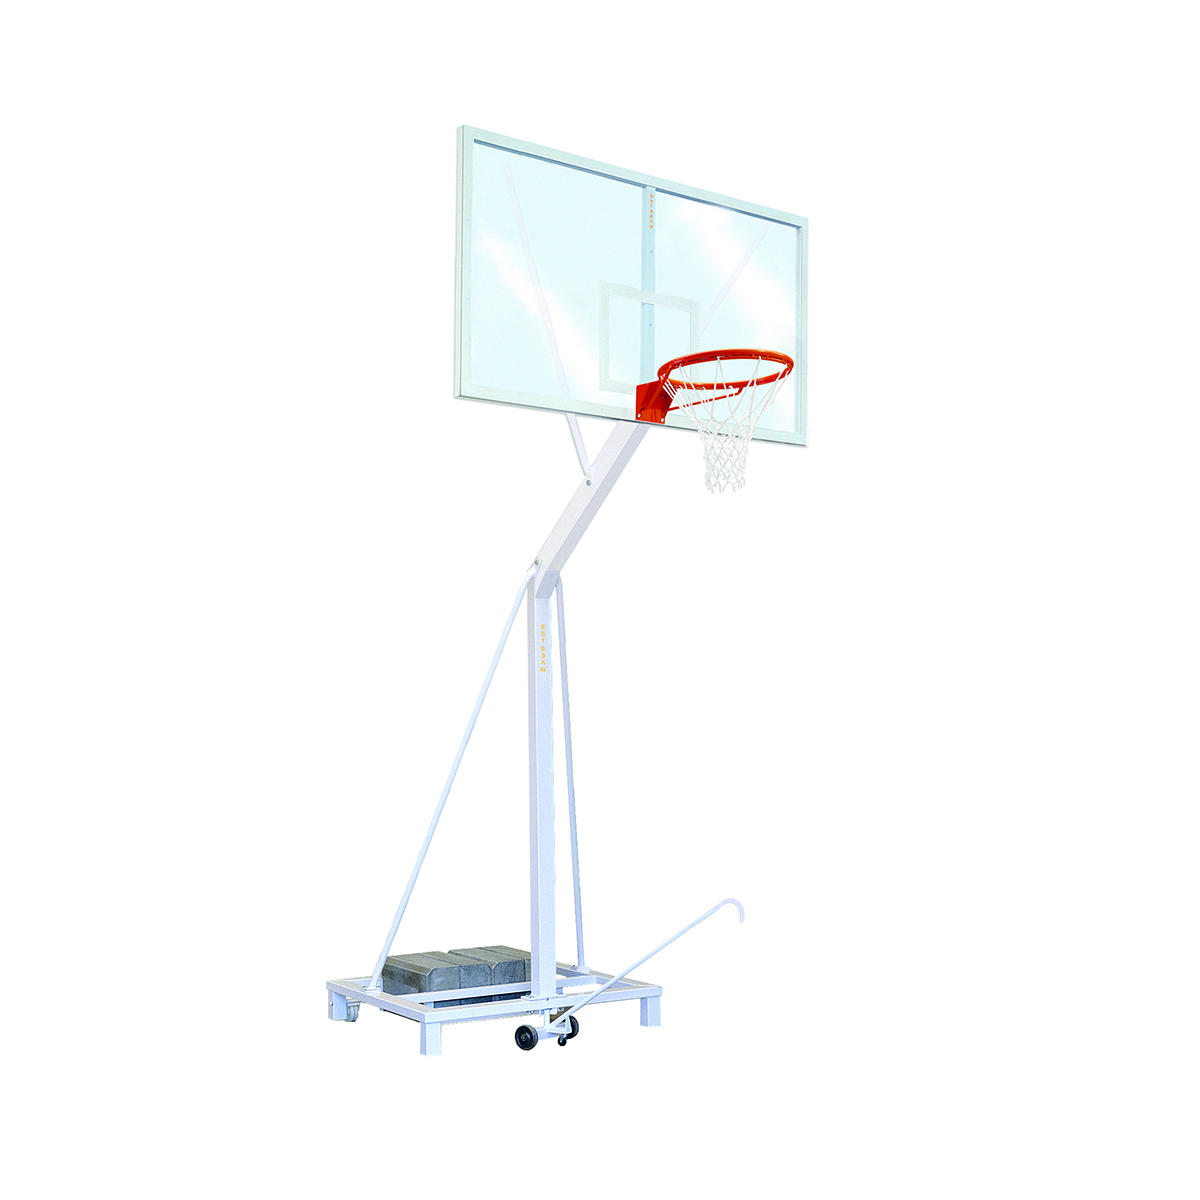 Canasta baloncesto fija tablero fibra de vidrio extensión 165 cm BF16525-1  - ESTEBAN SG&E